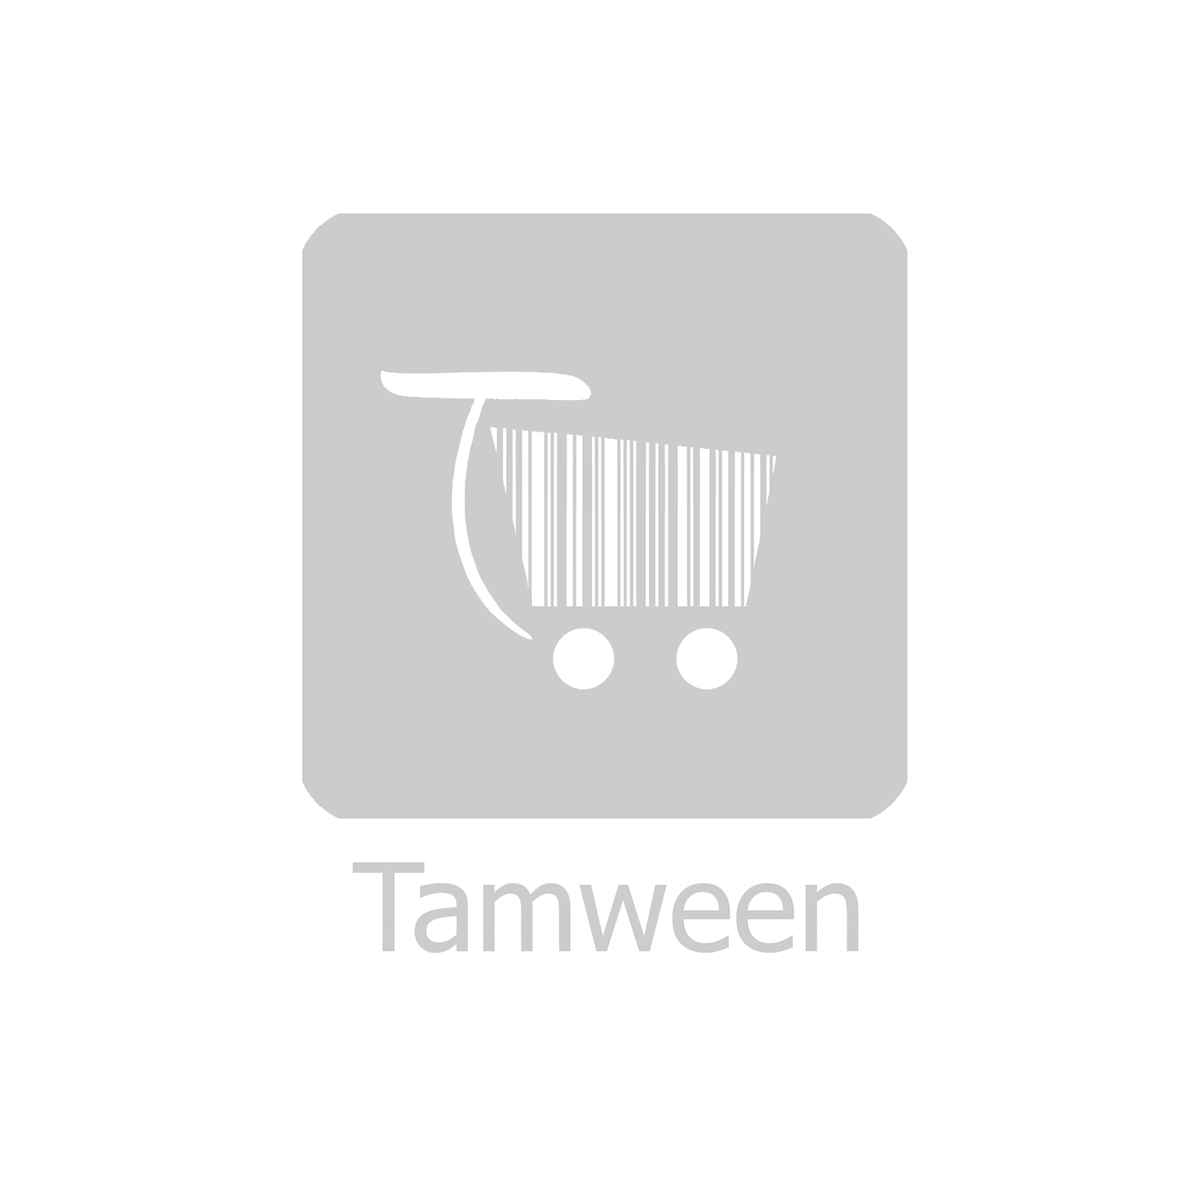 tamween logo design fai9a3 time24 saudi arabia riyadh mad pixels apple app iphone 5 apps online supermarket shop